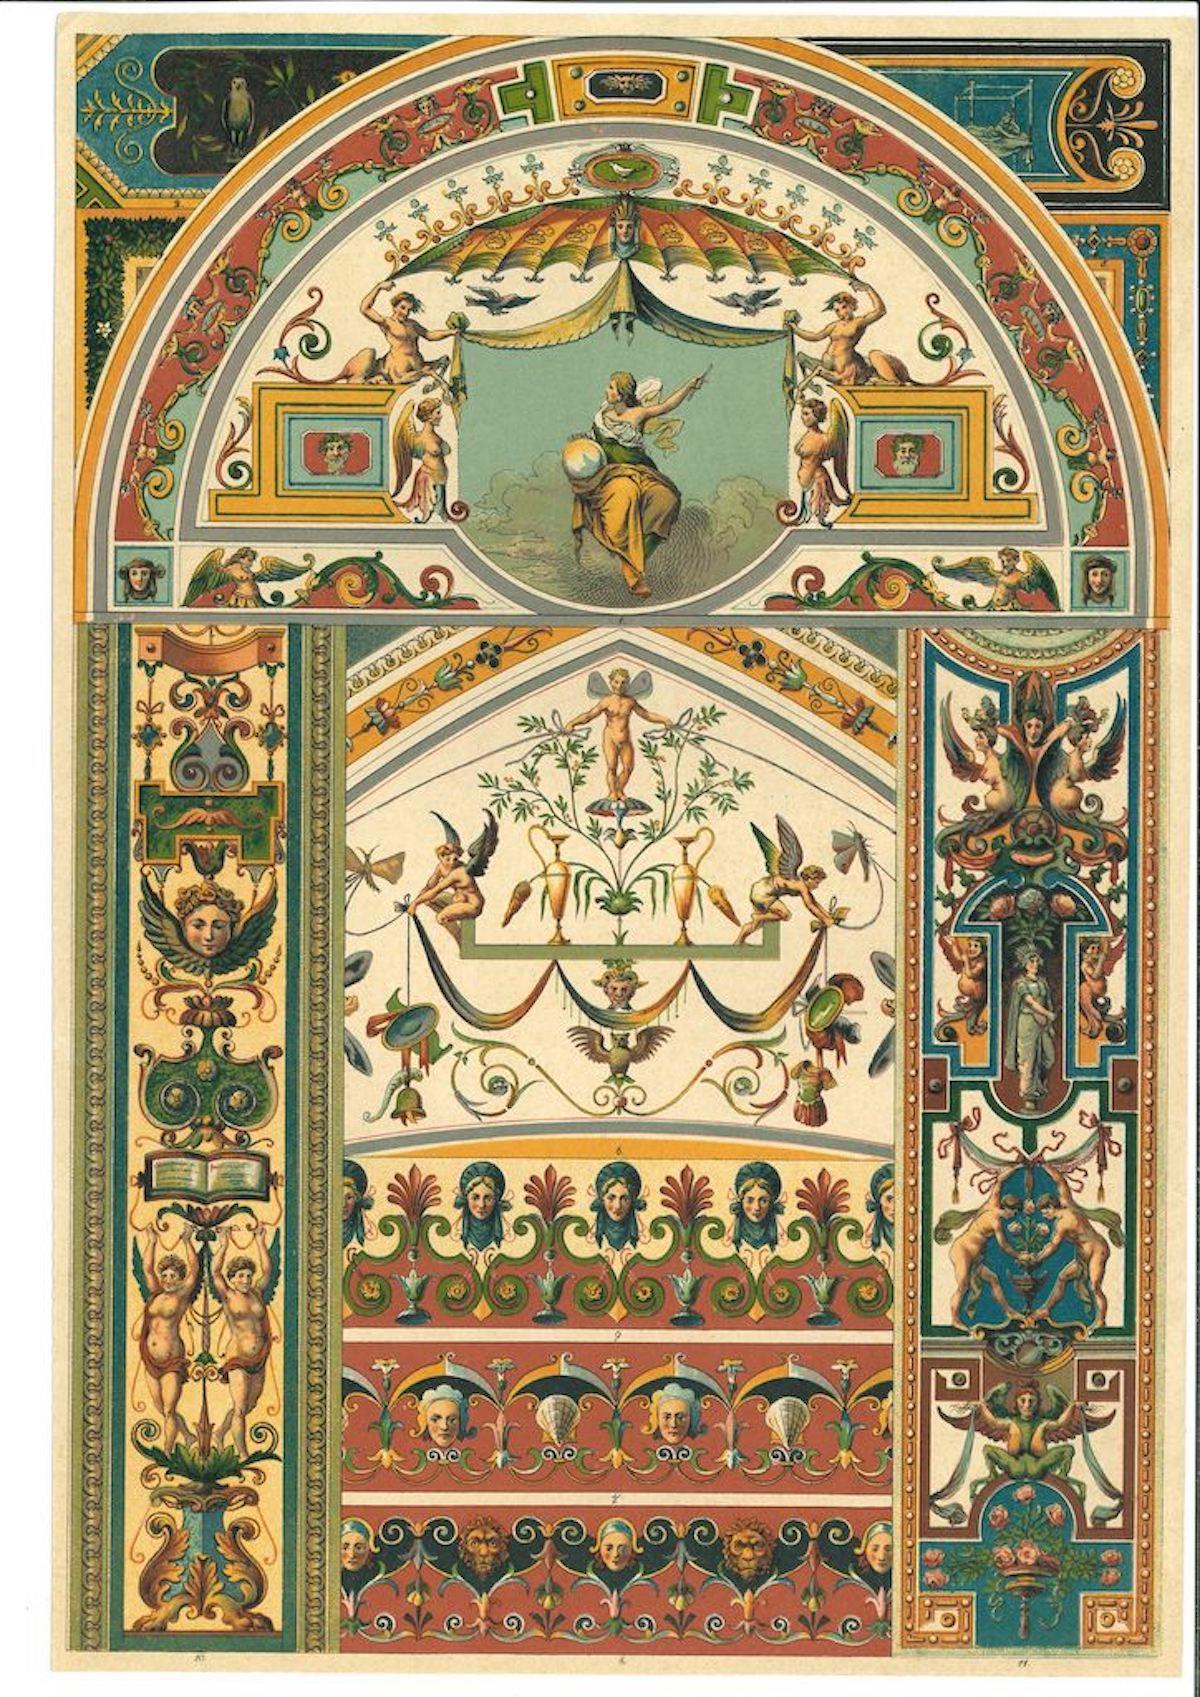 Unknown Figurative Print - Decorative Motifs of the Italian Renaissance - Chromolithograph - 20th Century